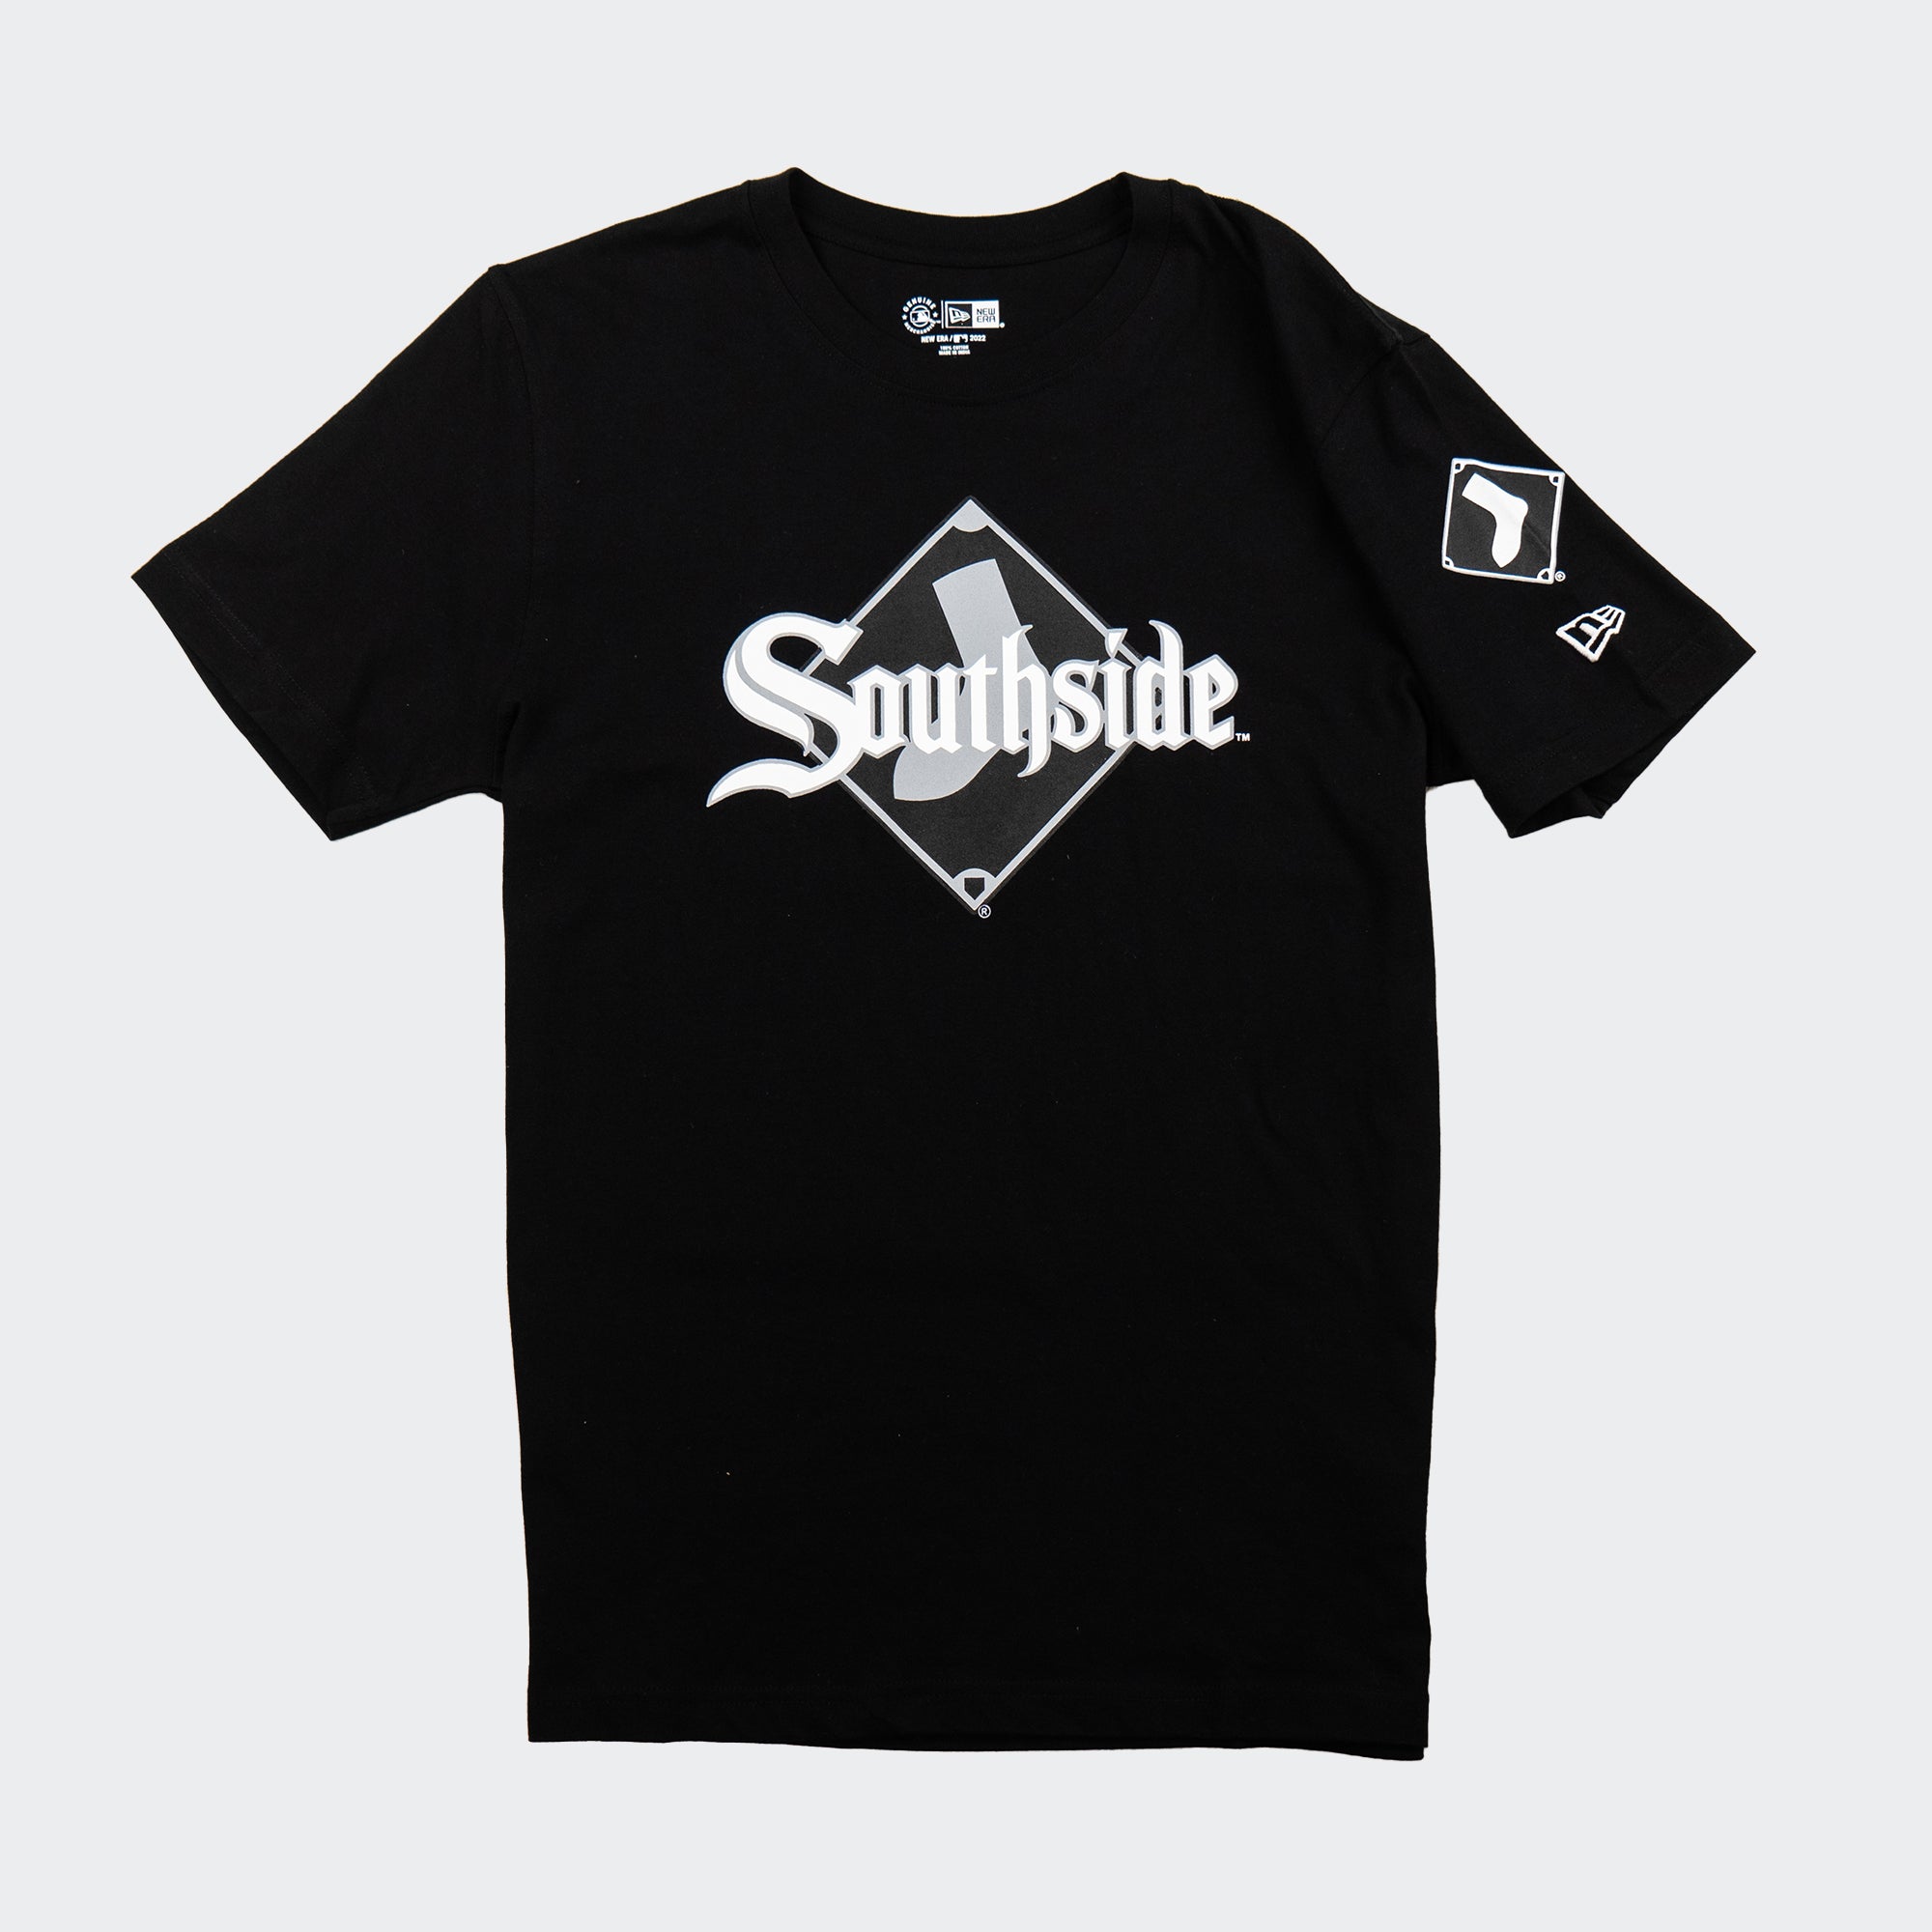 Chicago White Sox Southside City Connect Black T-Shirt - Clark Street Sports